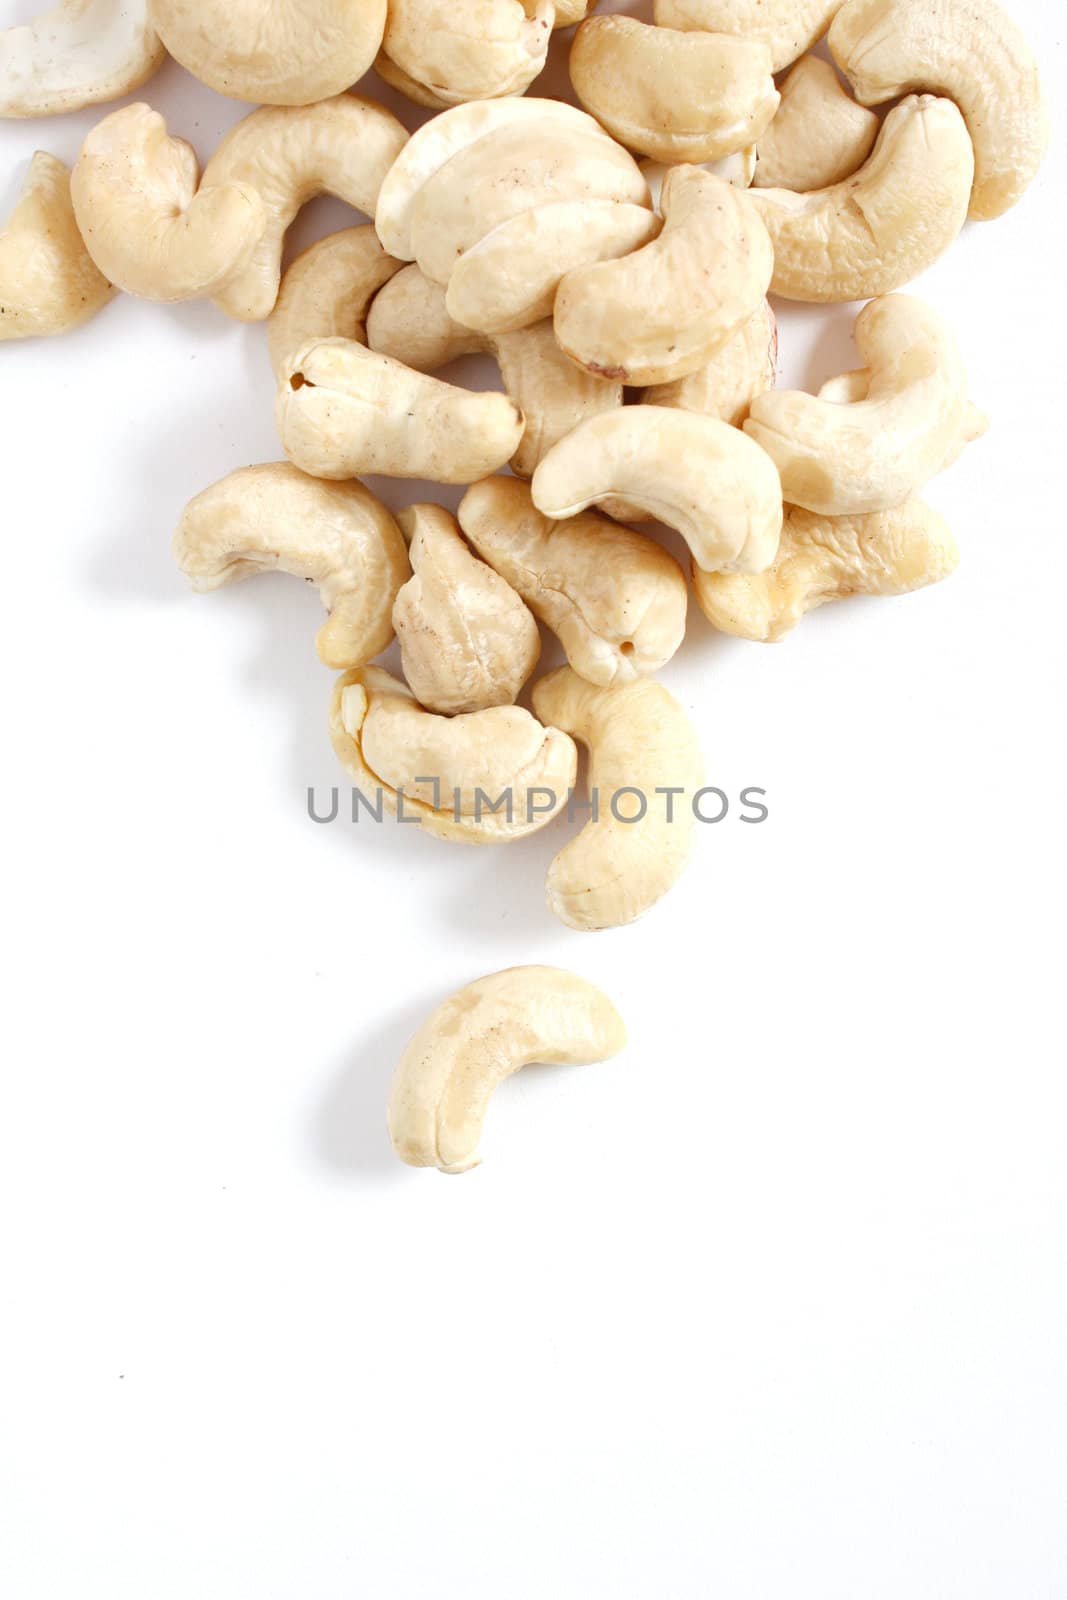 Cashew nuts by leeser